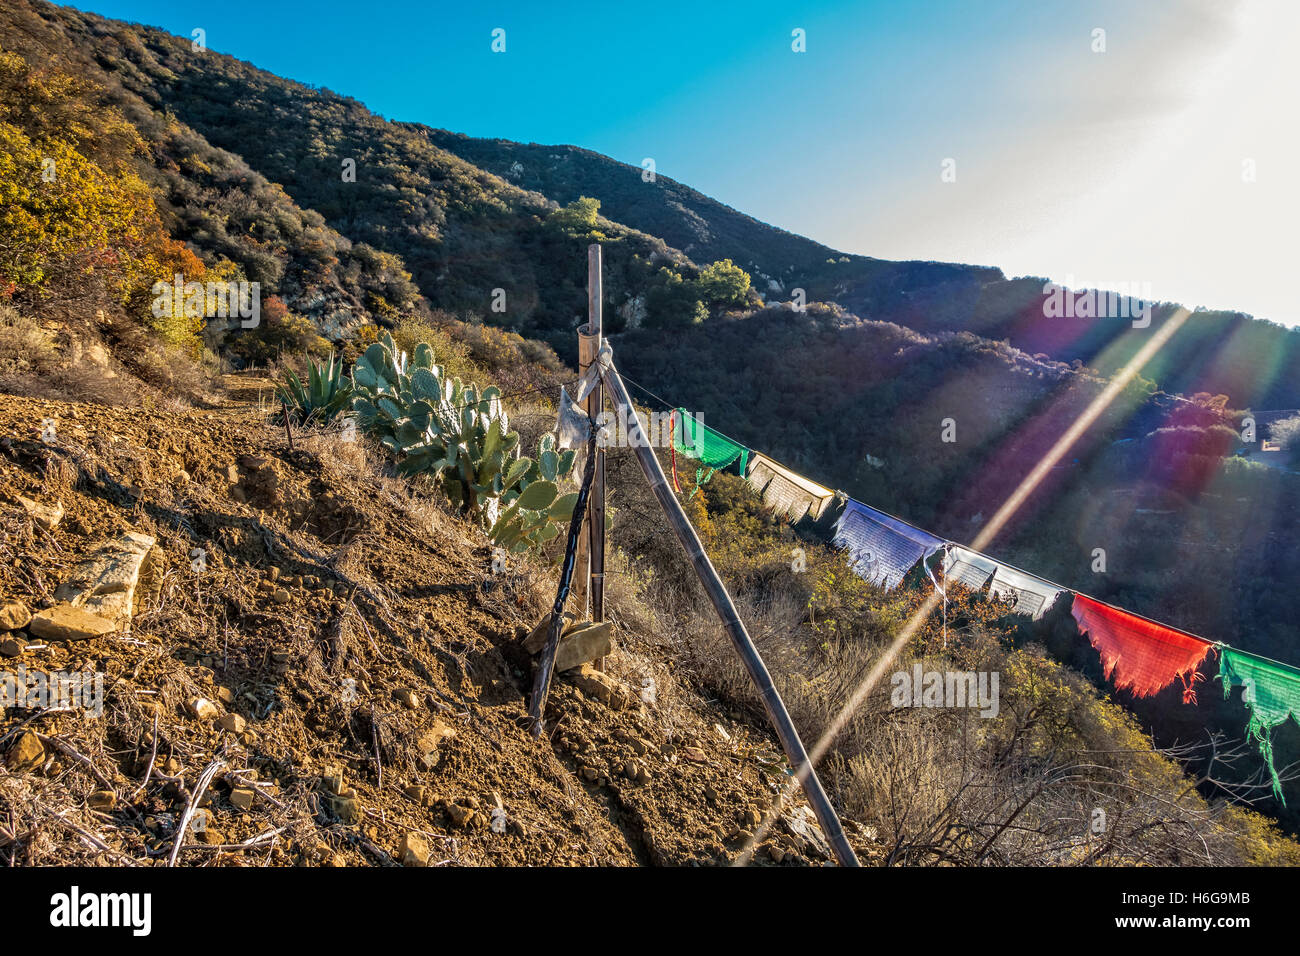 Prayer flags hanging on Romero Canyon Trail in Santa Barbara, California. Stock Photo